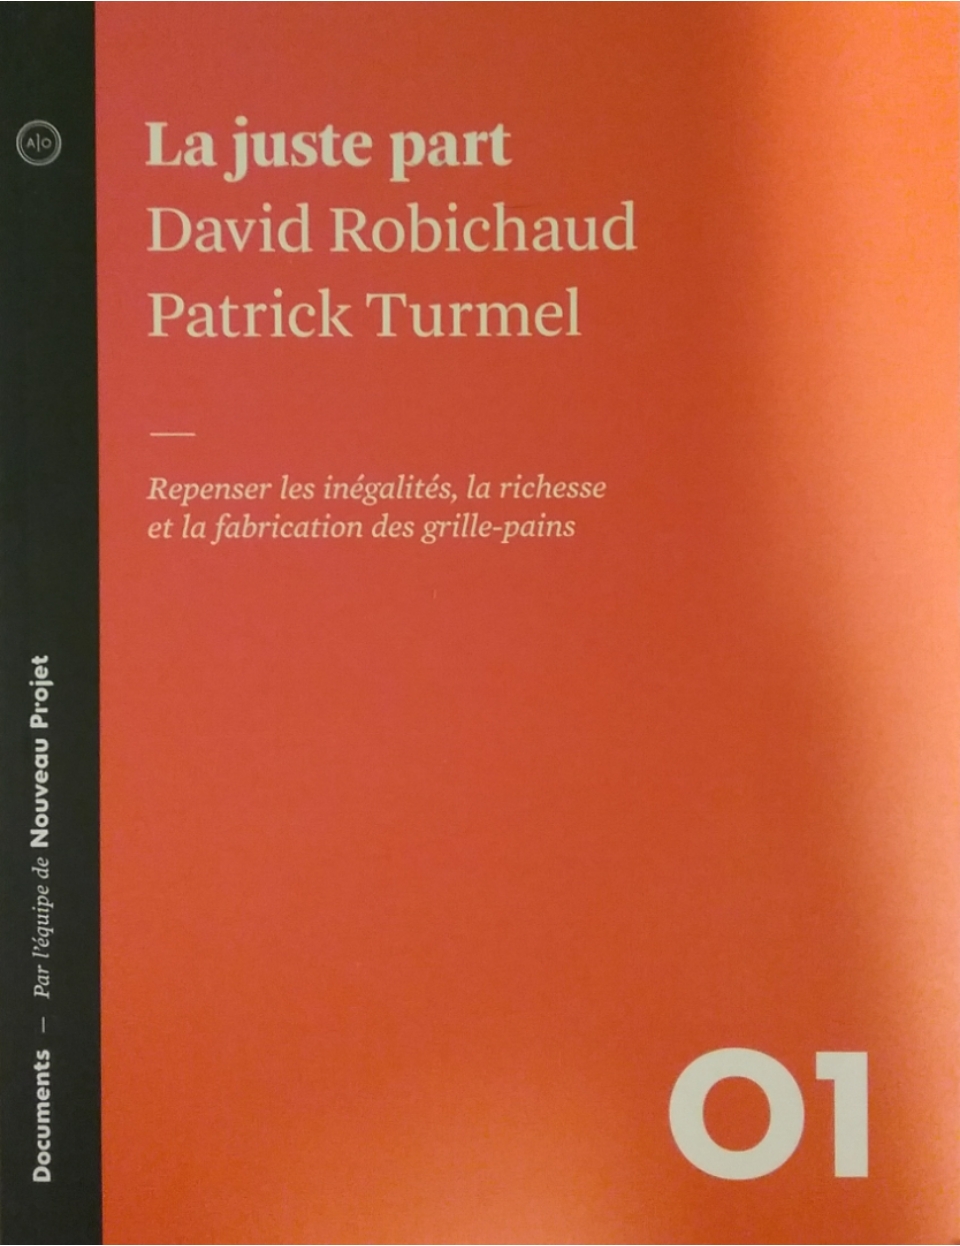 La juste part David Robichaud Patrick Turmel